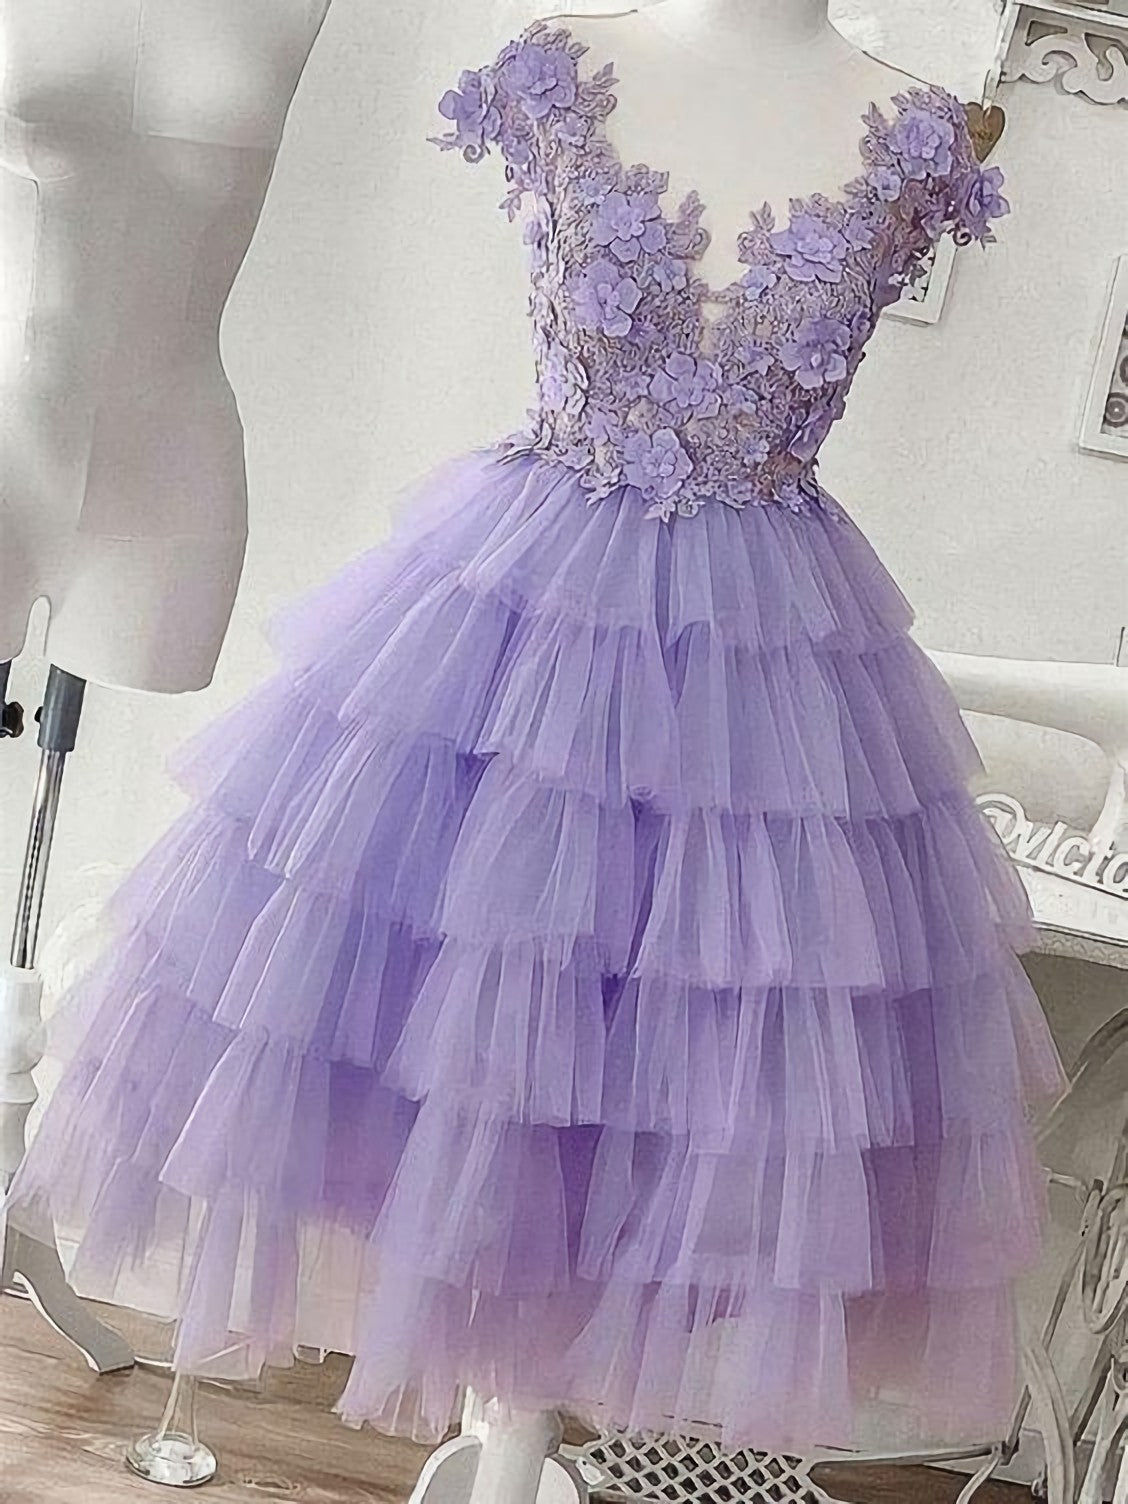 Prom Dress Designs, Purple Tulle Applique Short Homecoming Dress, Homecoming Dress